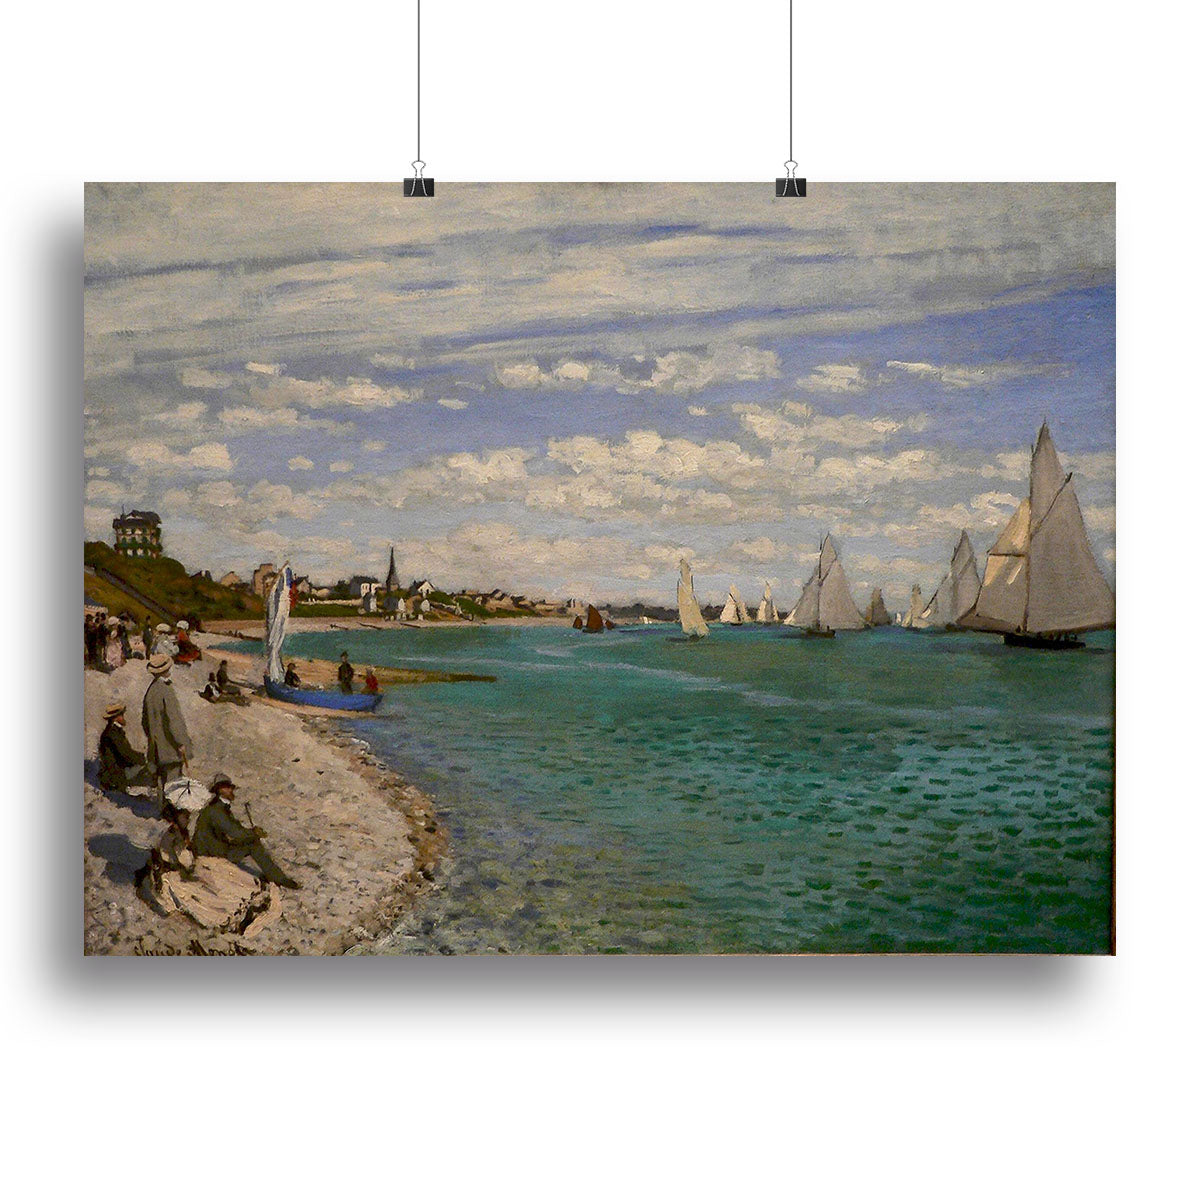 Regatta at St. Adresse by Monet Canvas Print or Poster - Canvas Art Rocks - 2